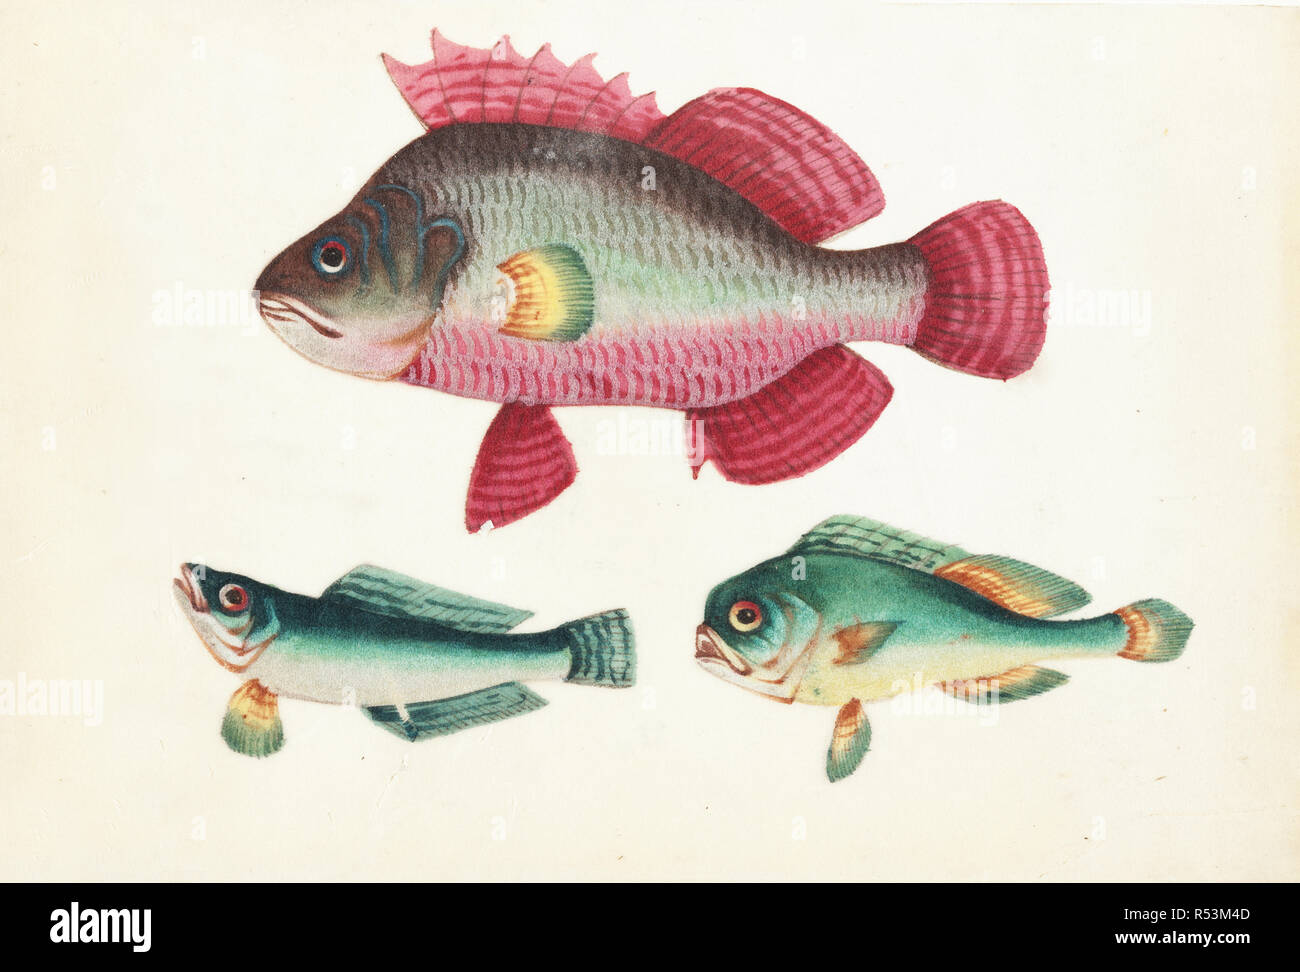 chinese fish illustration Stock Photo